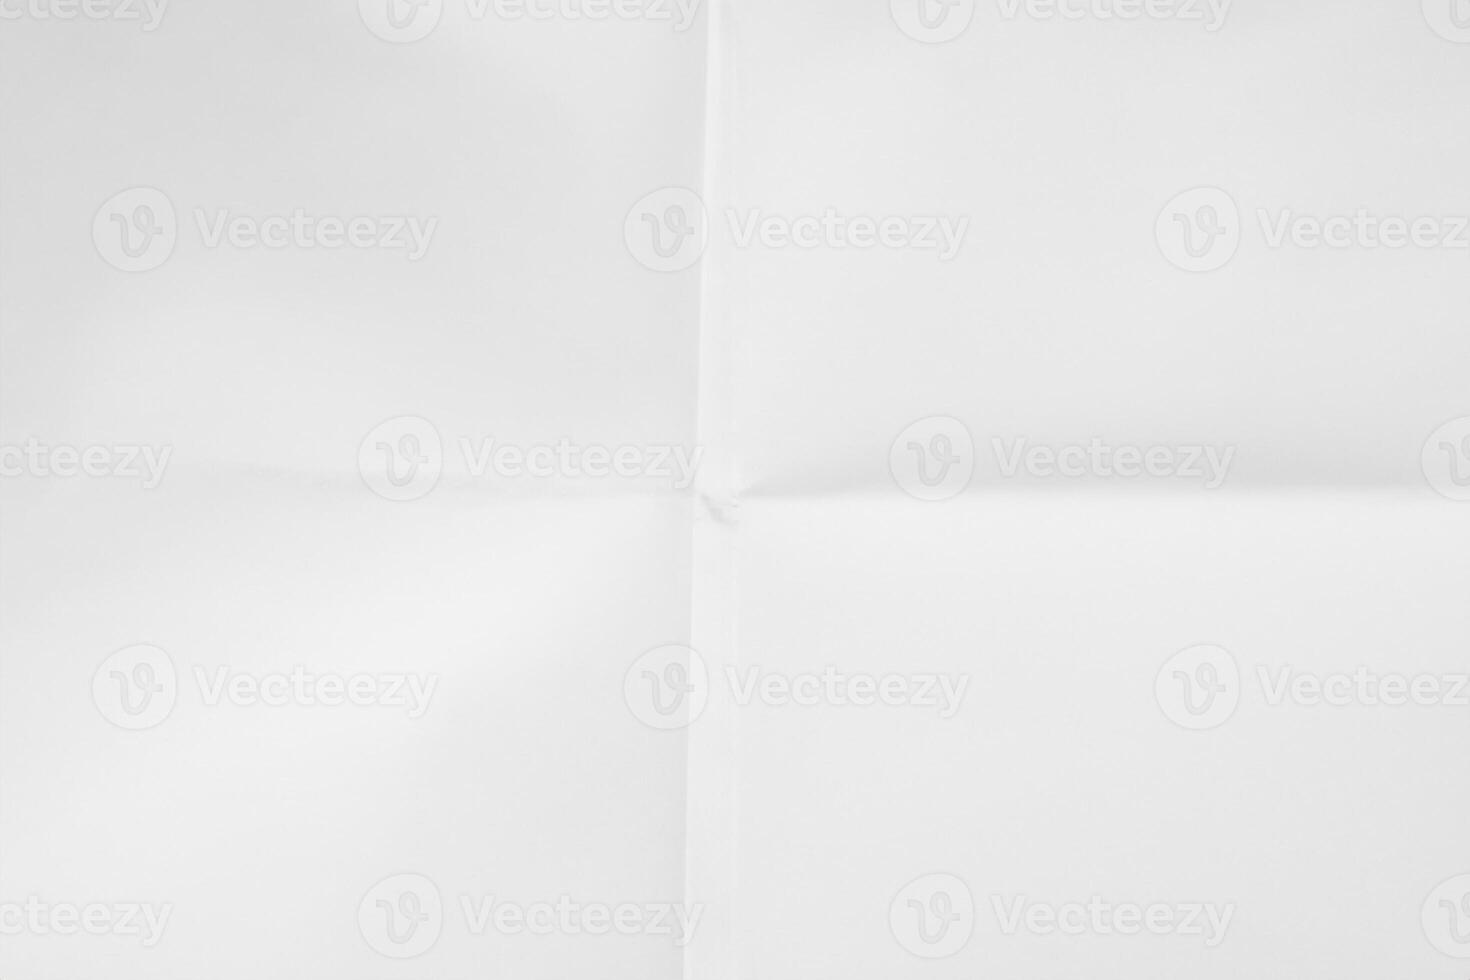 vit ark av papper vikta textur foto